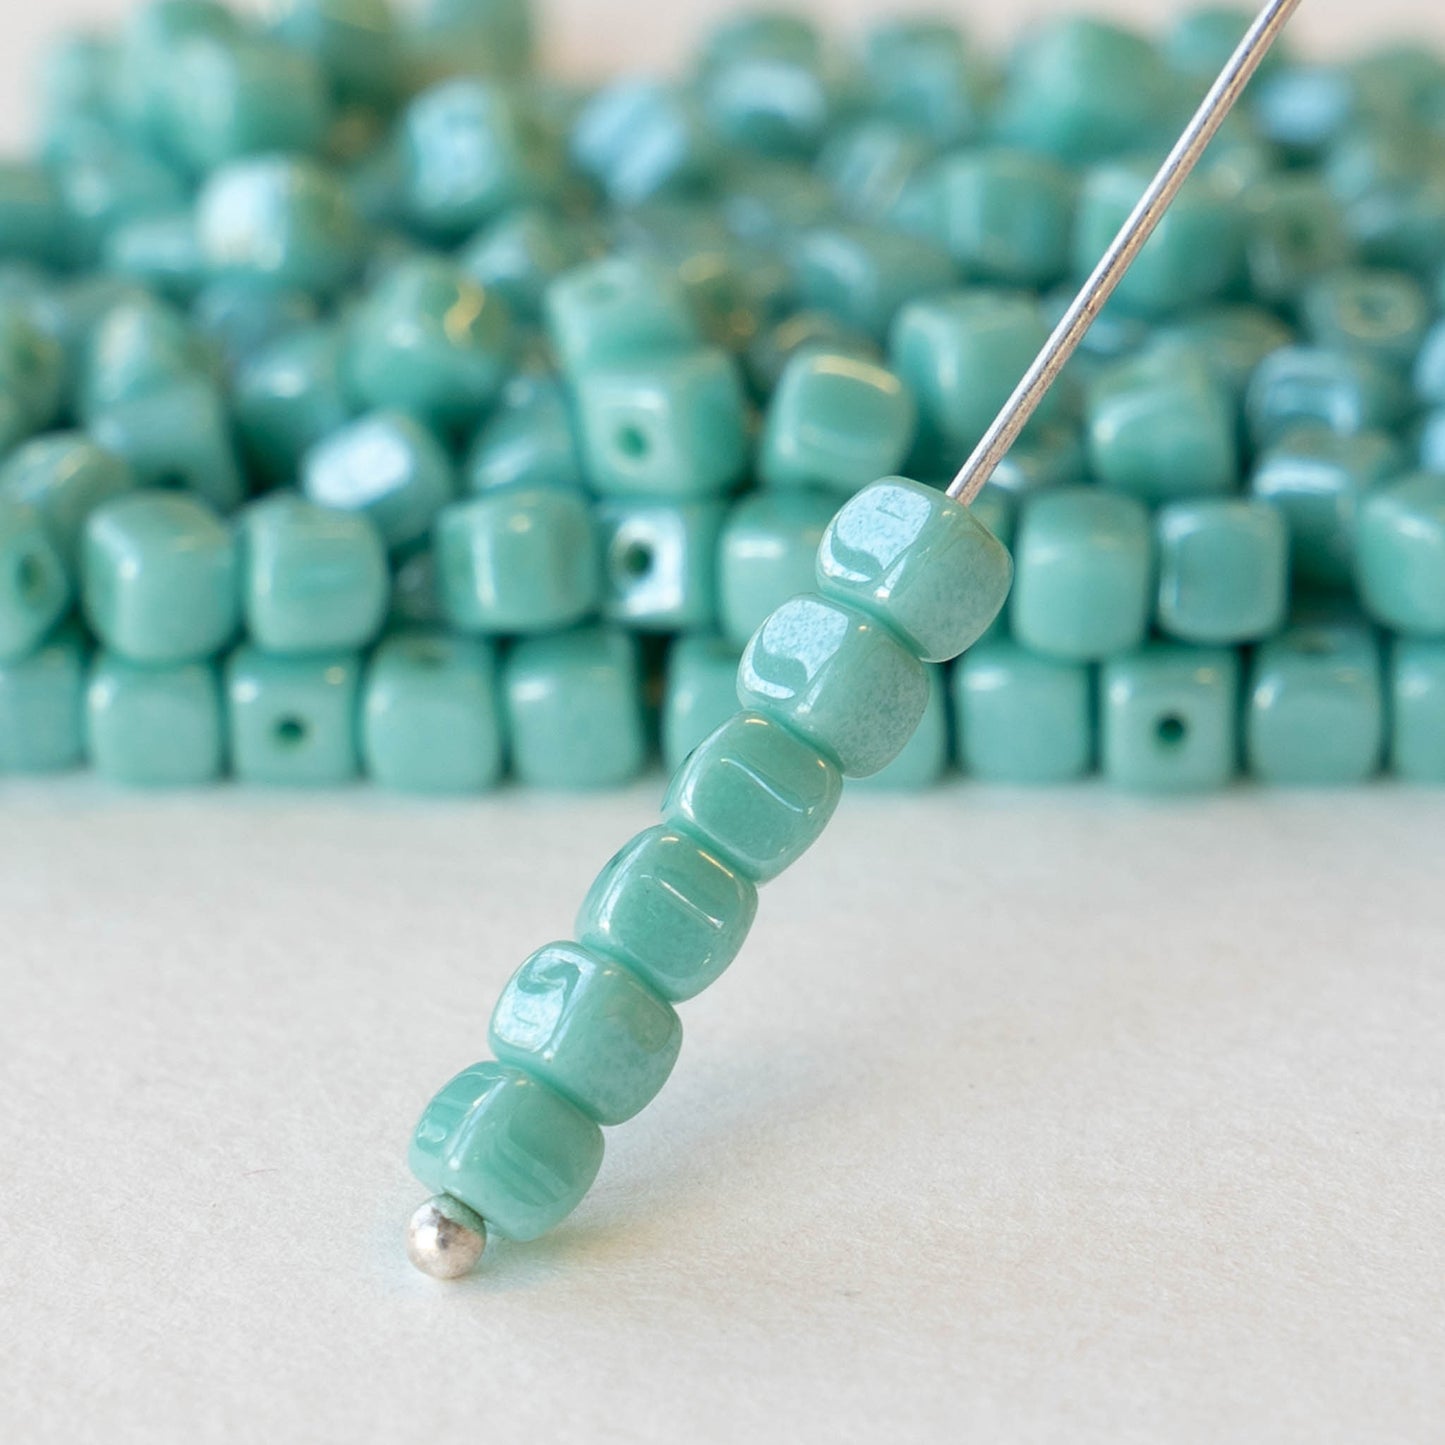 4mm Glass Cube Beads - Seafoam Green Luster - 100 beads